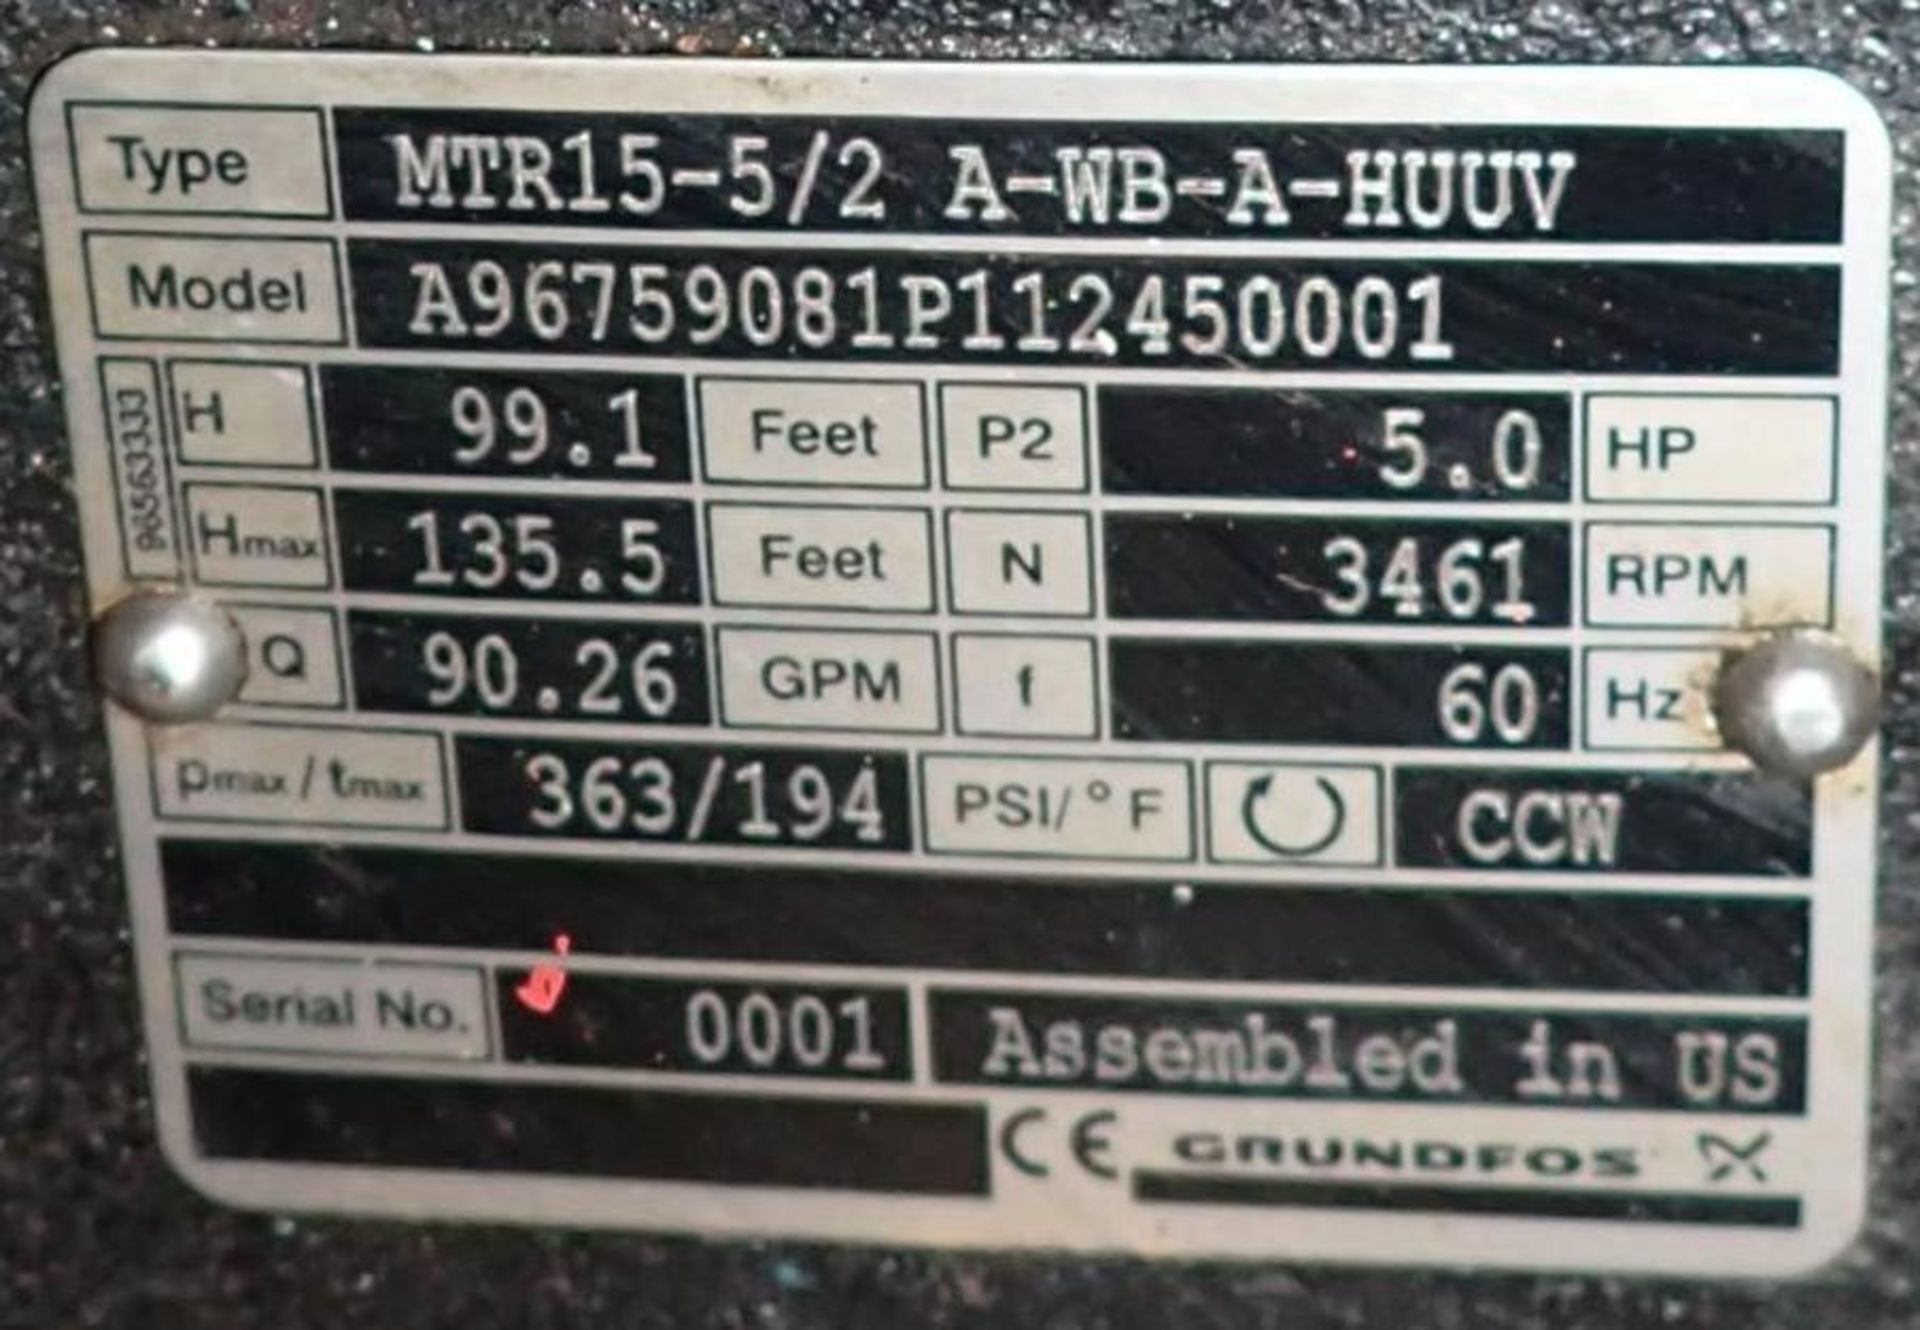 Grundfos #MTR15-5/2 A-WB-A-HUUV Pump - Image 4 of 4